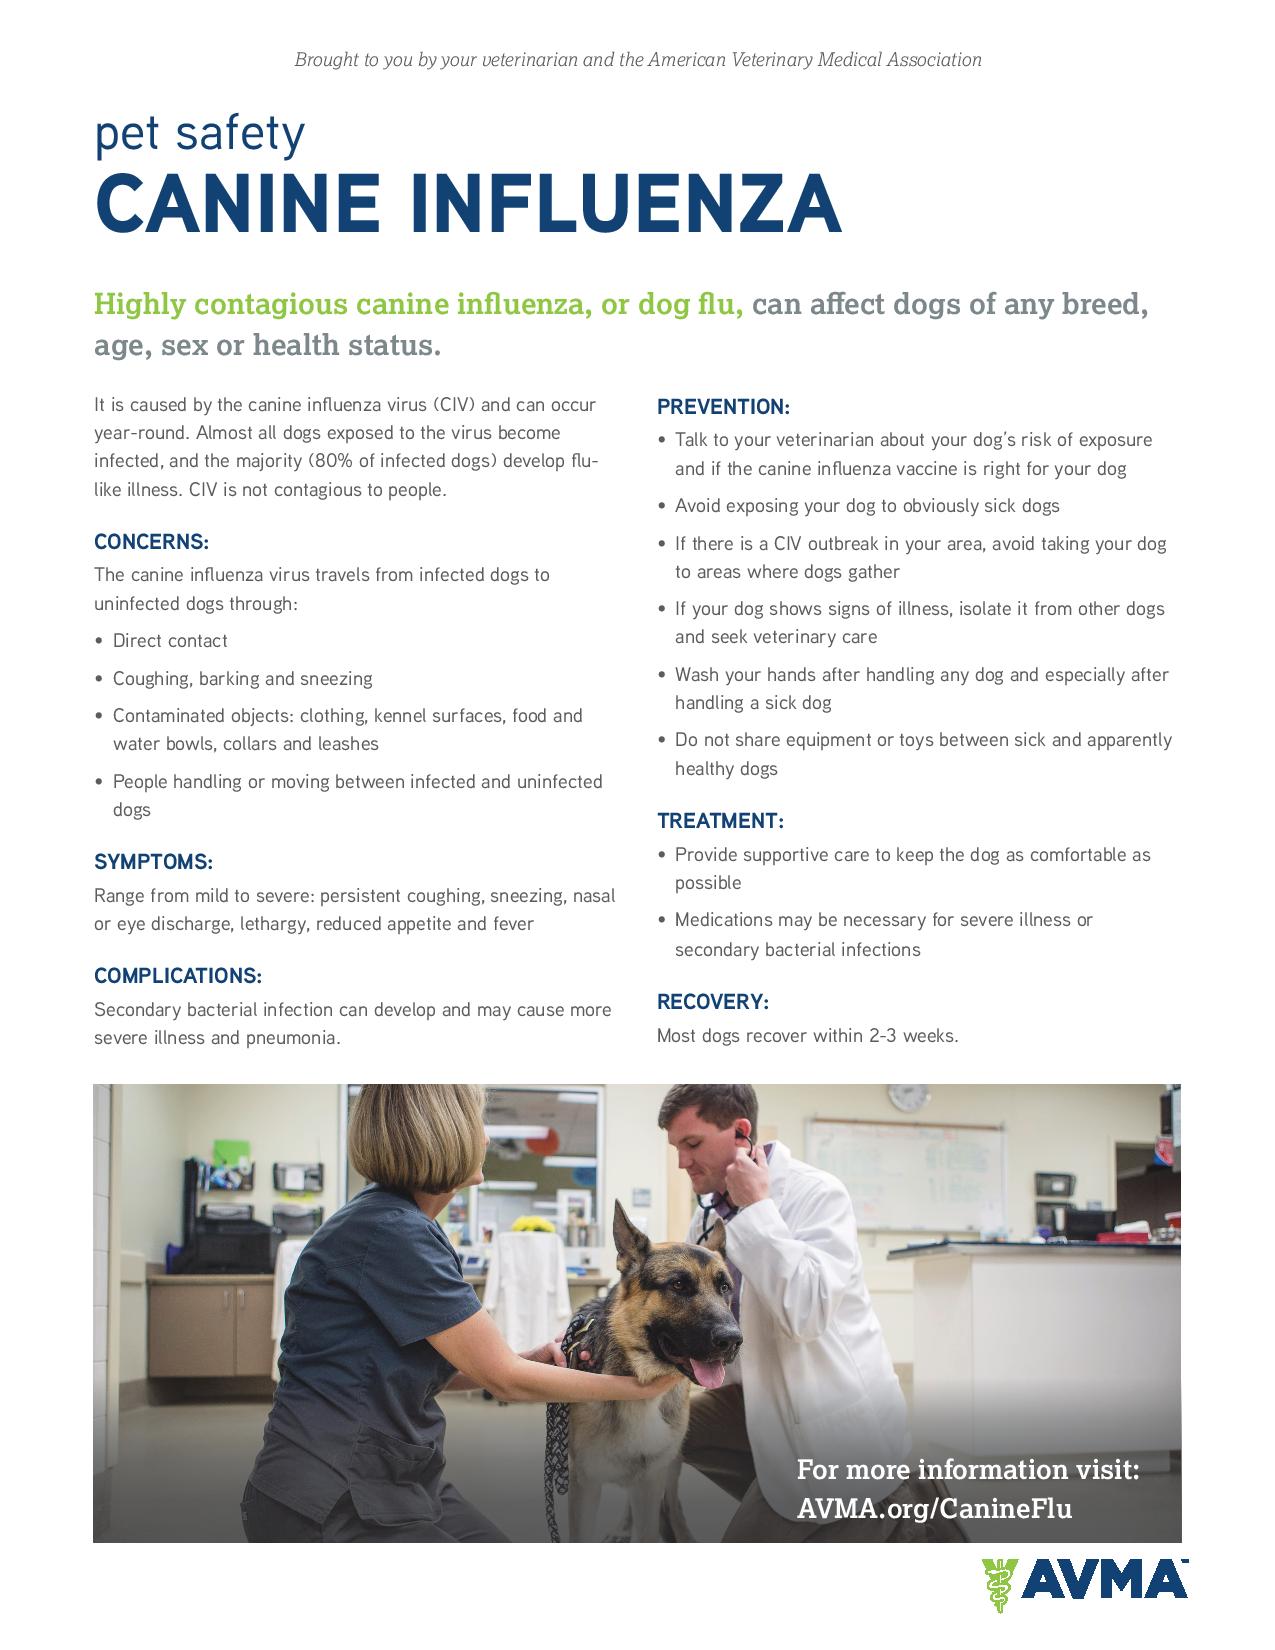 Canine Influenza Handout